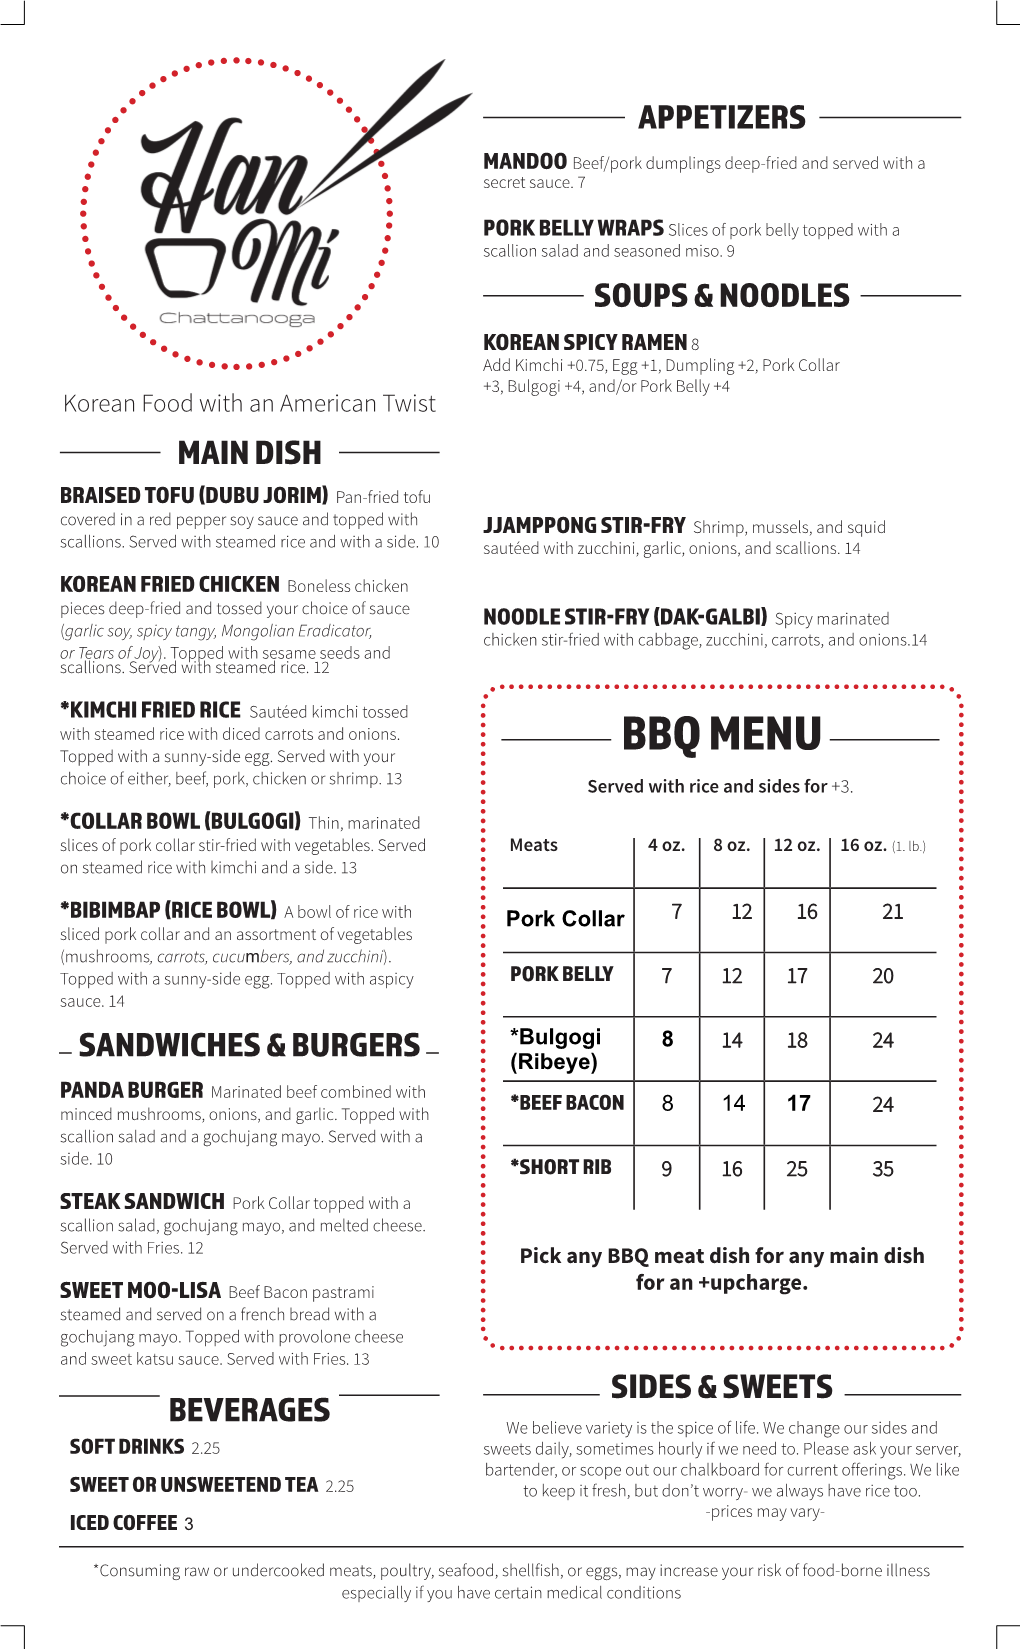 BBQ MENU Choice of Either, Beef, Pork, Chicken Or Shrimp